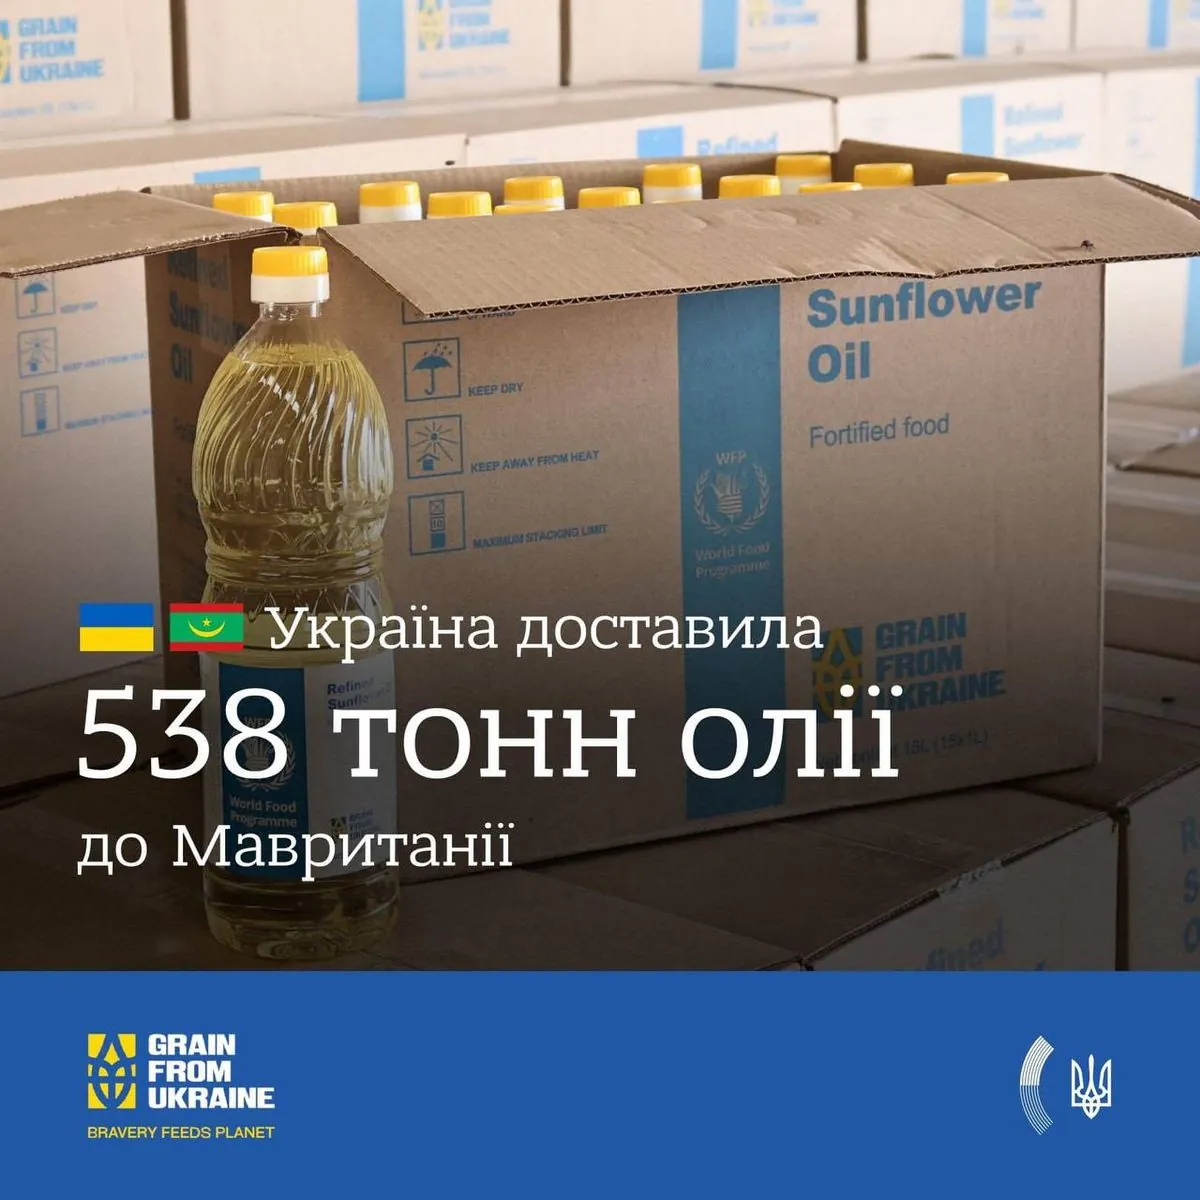 grain-from-ukraine-ukraina-postavyla-538-tonn-olii-do-mavrytanii